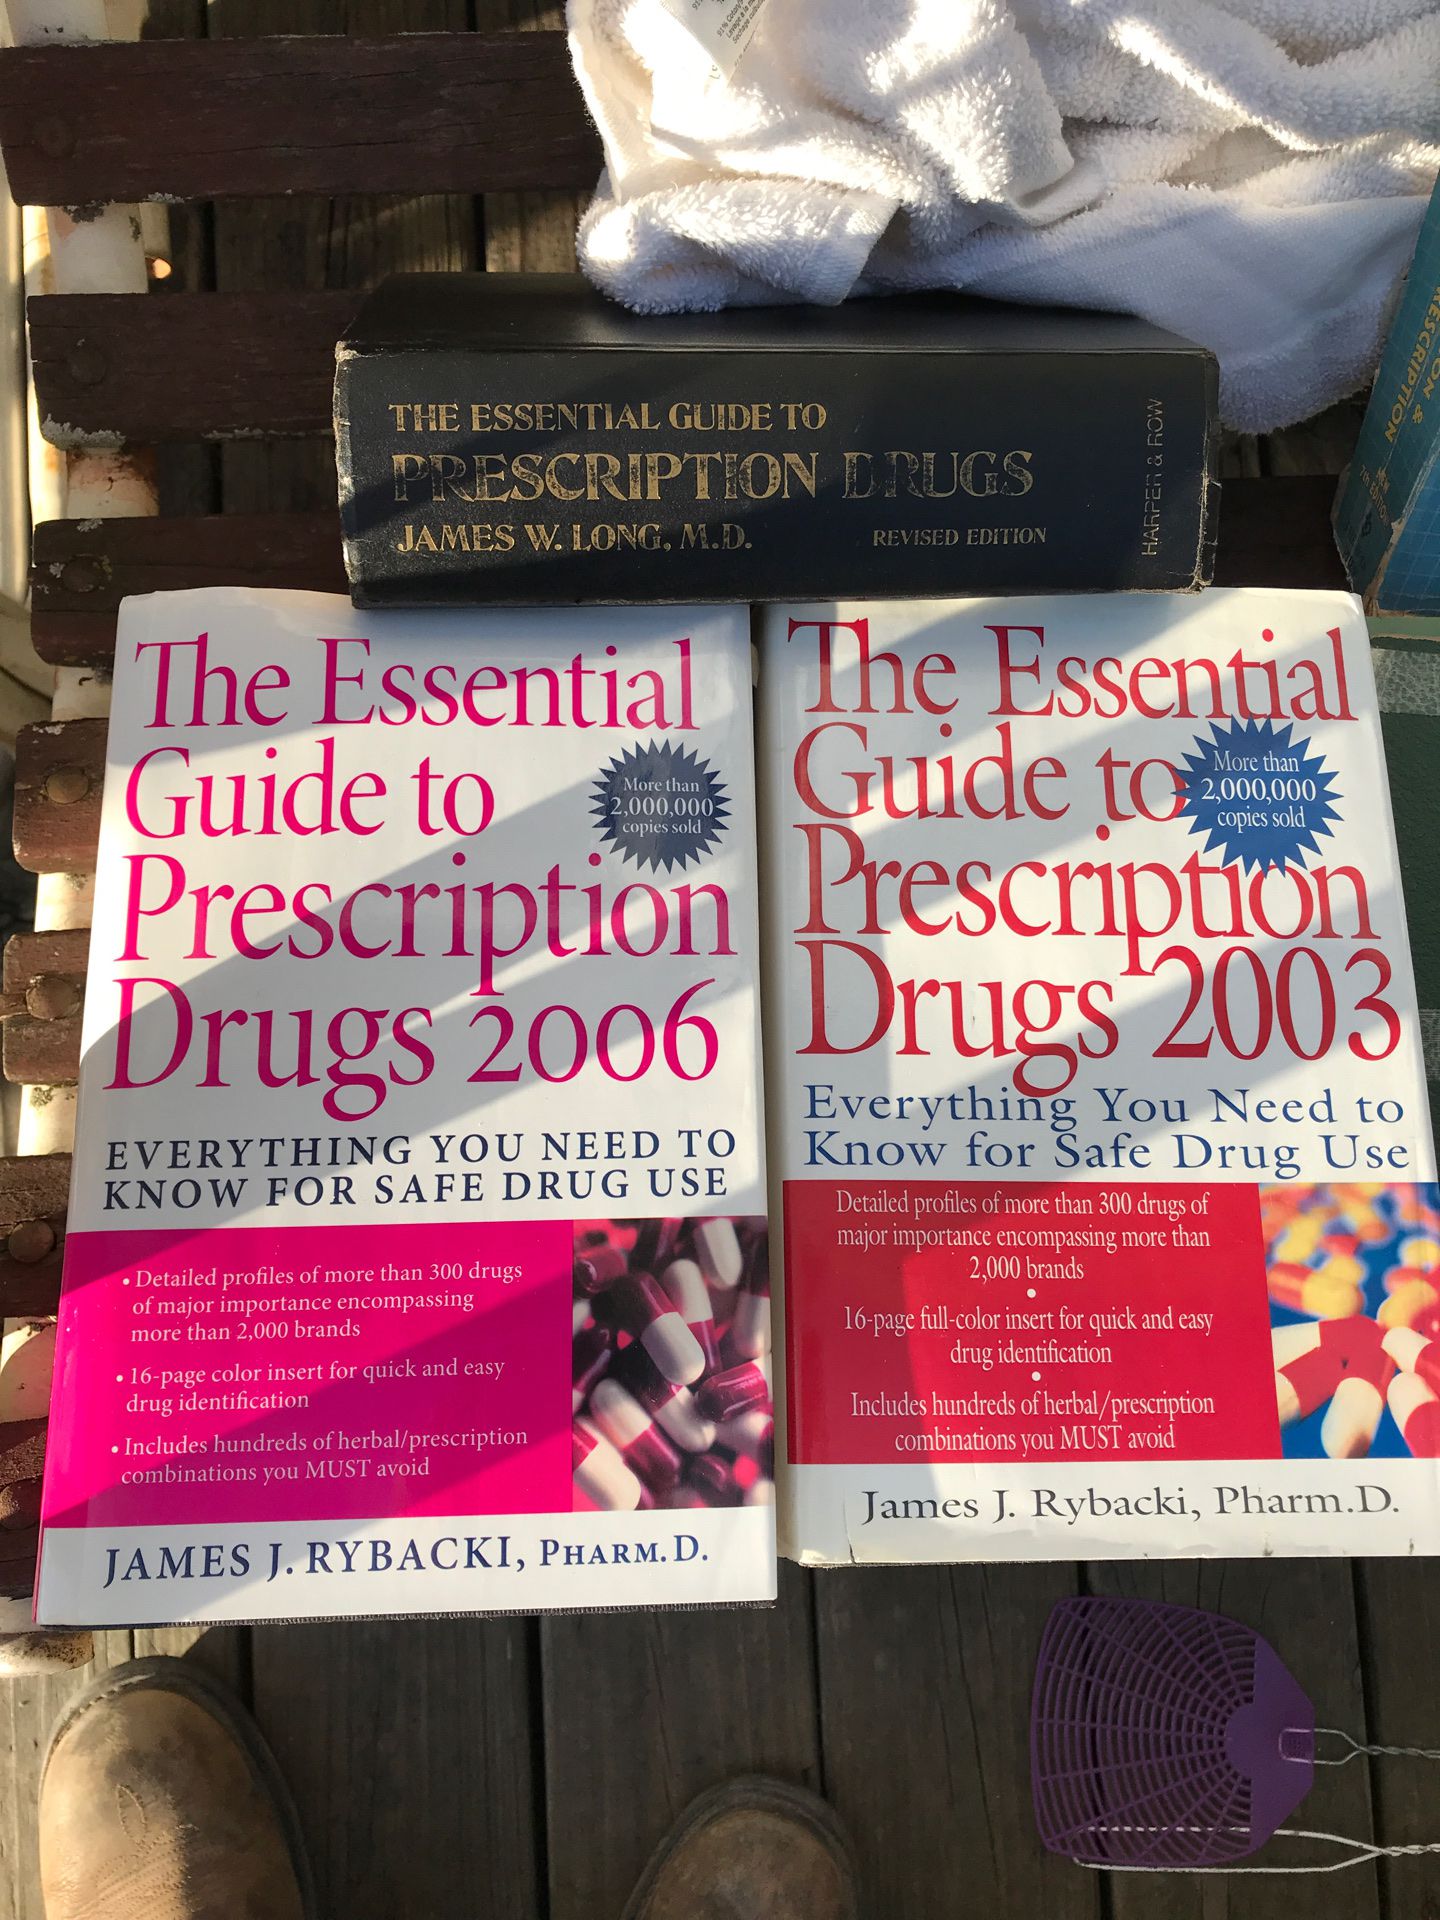 Old prescription drug books